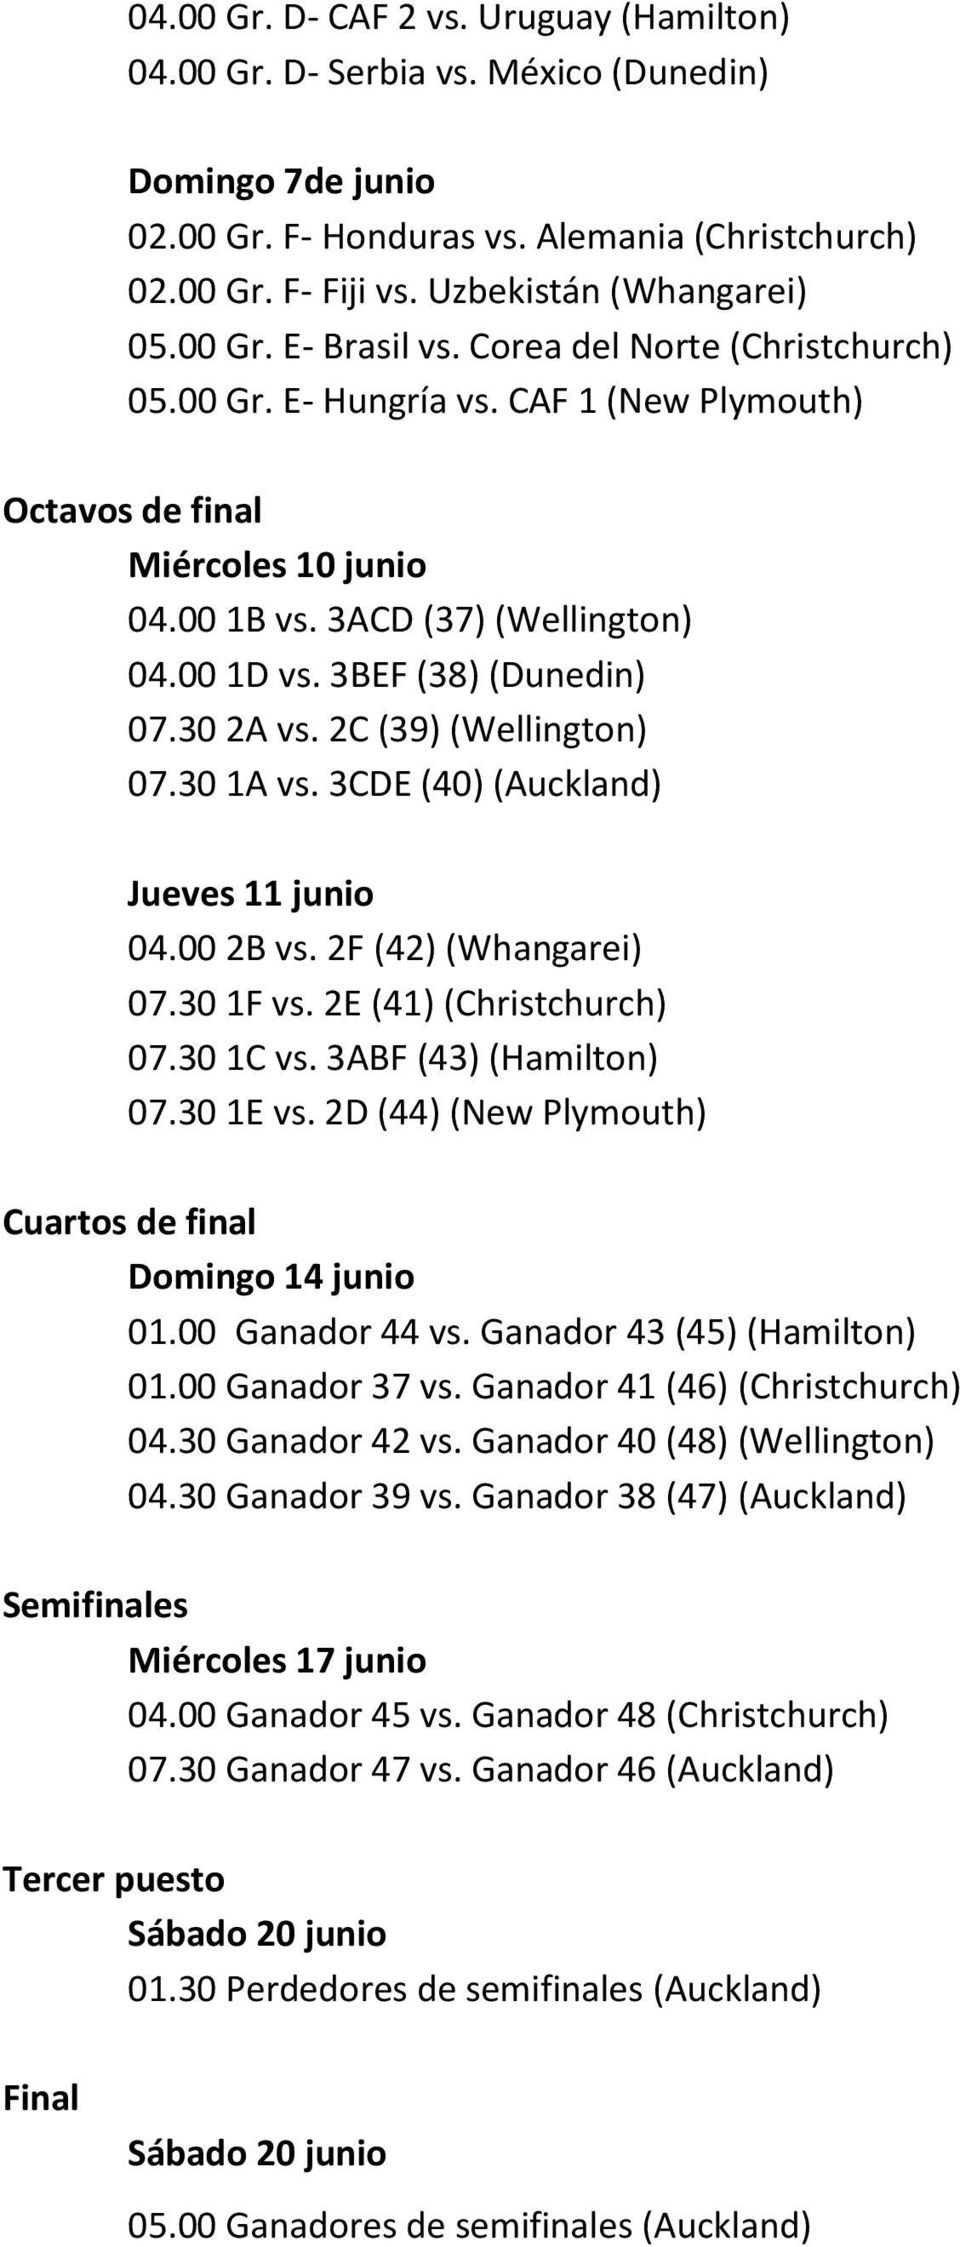 3BEF (38) (Dunedin) 07.30 2A vs. 2C (39) (Wellington) 07.30 1A vs. 3CDE (40) (Auckland) Jueves 11 junio 04.00 2B vs. 2F (42) (Whangarei) 07.30 1F vs. 2E (41) (Christchurch) 07.30 1C vs.